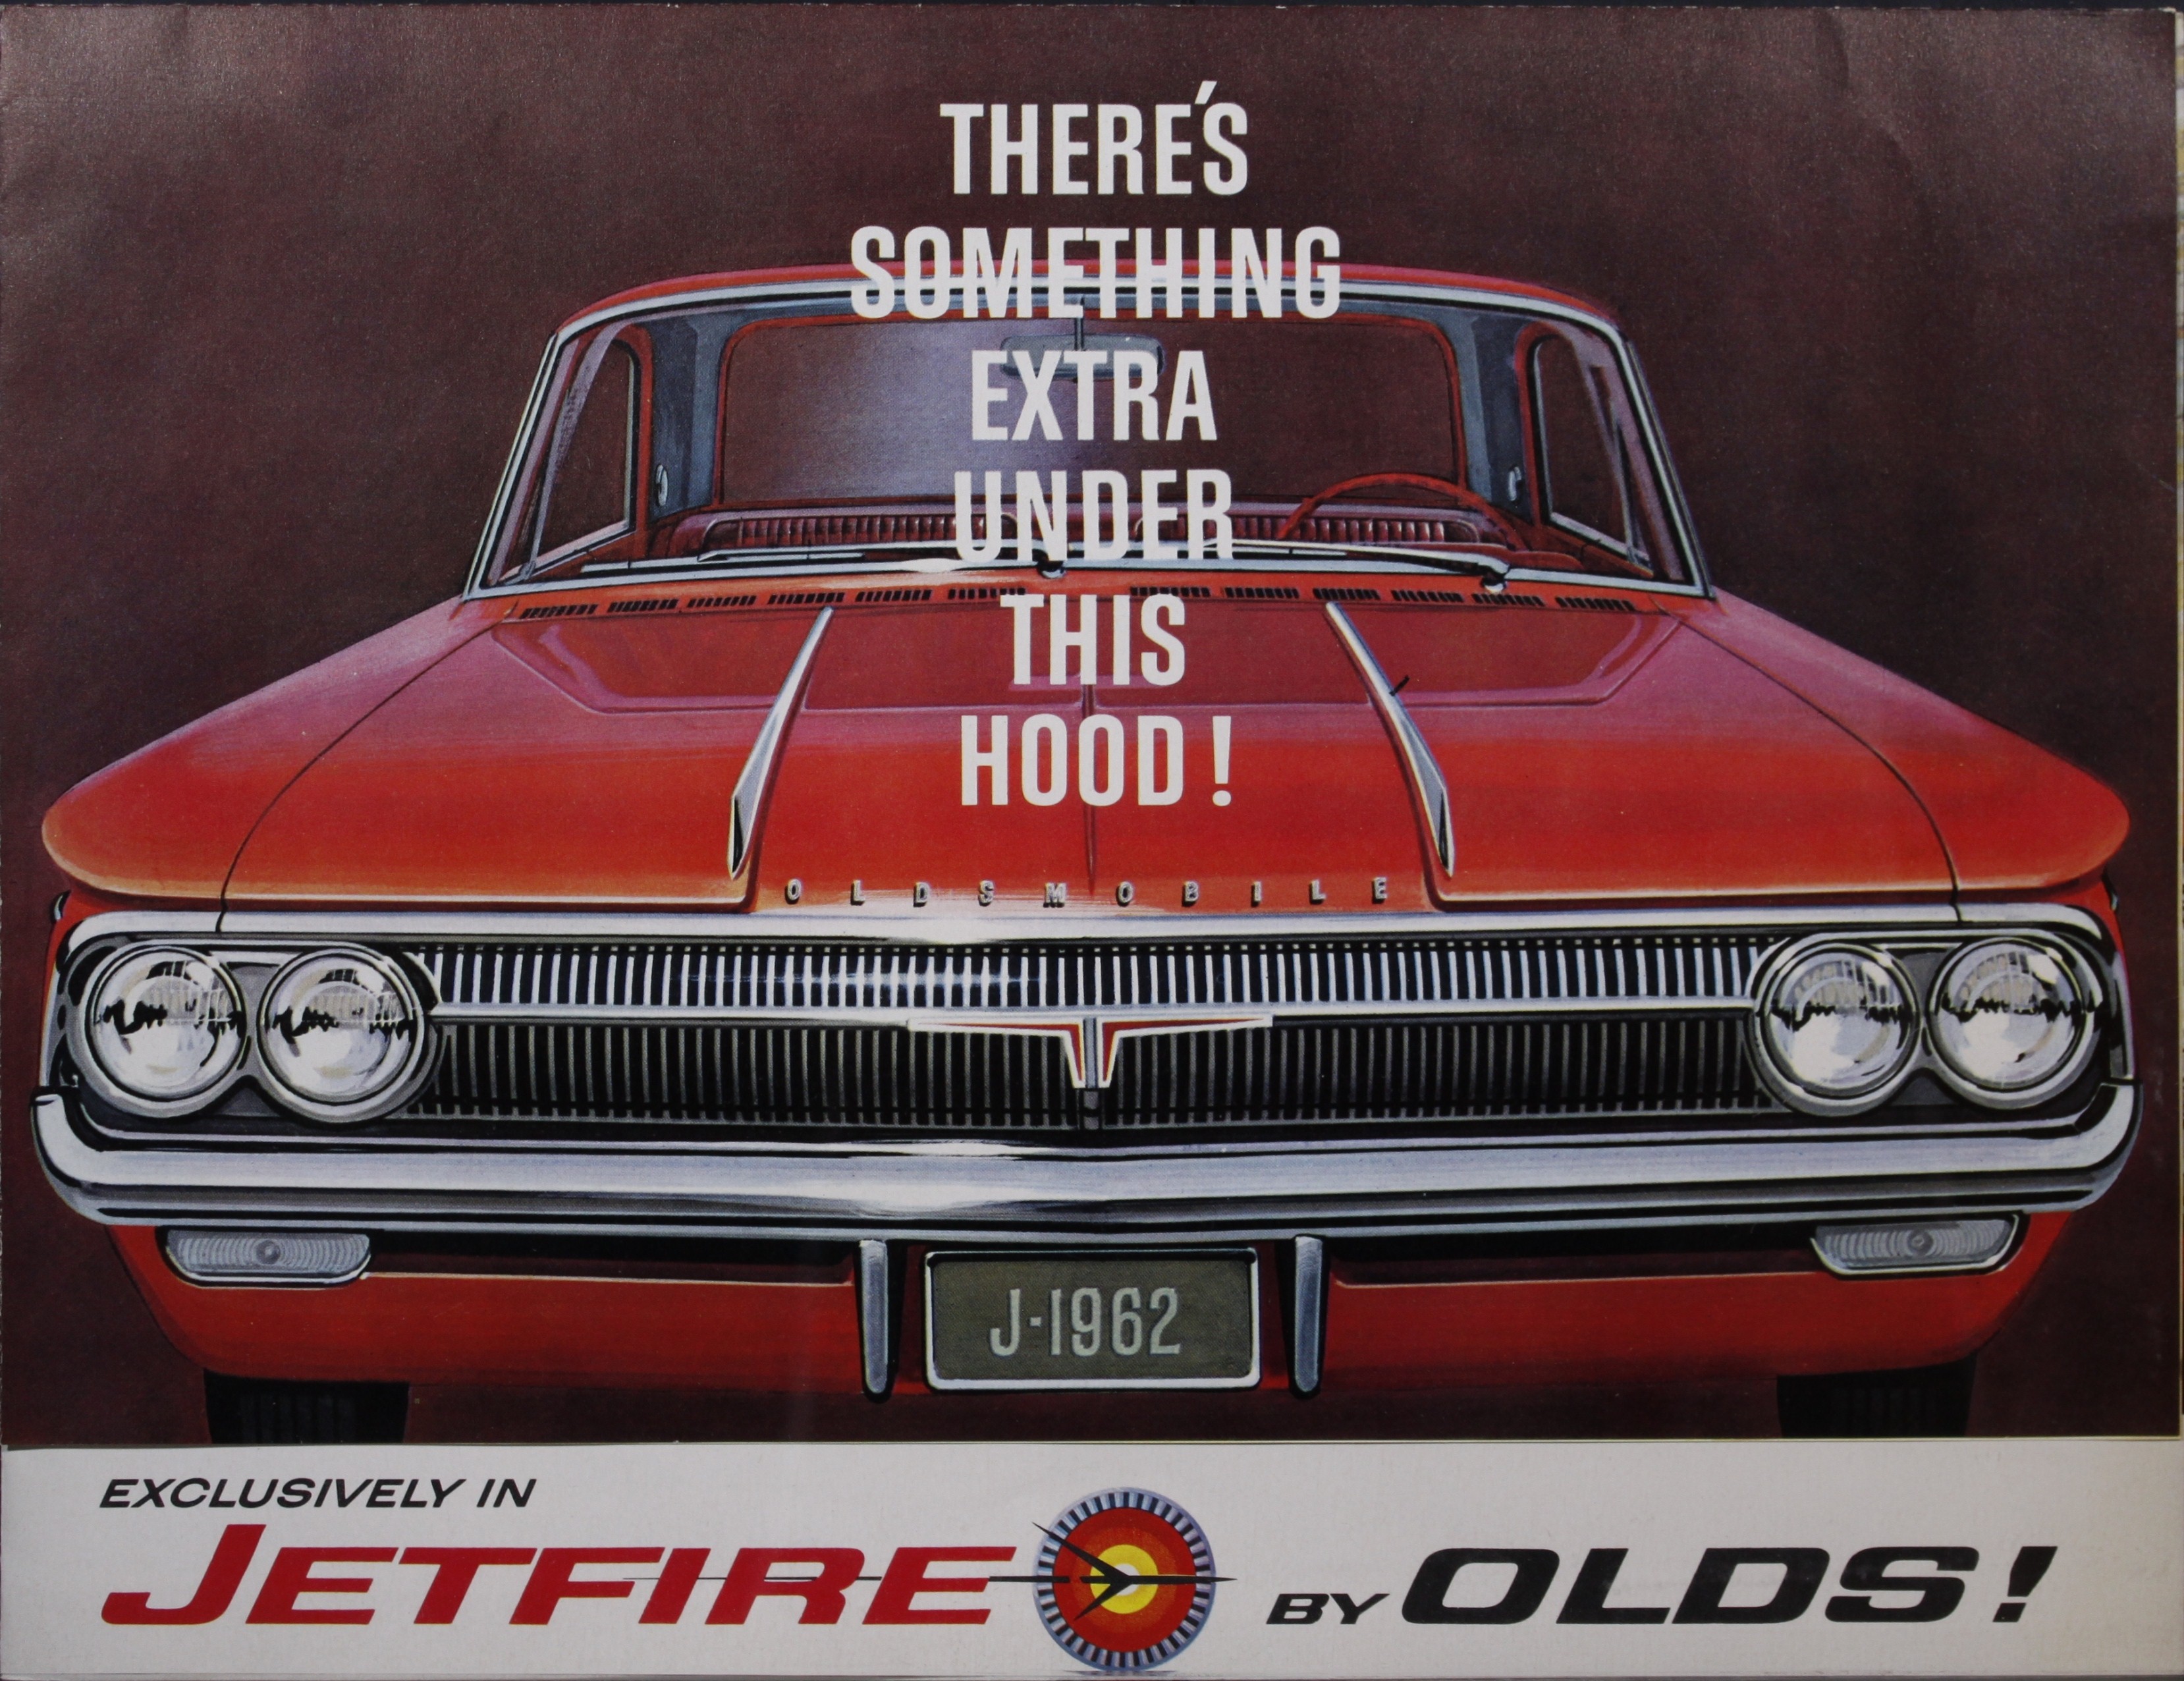 1962 Oldsmobile Jetfire Backgrounds on Wallpapers Vista